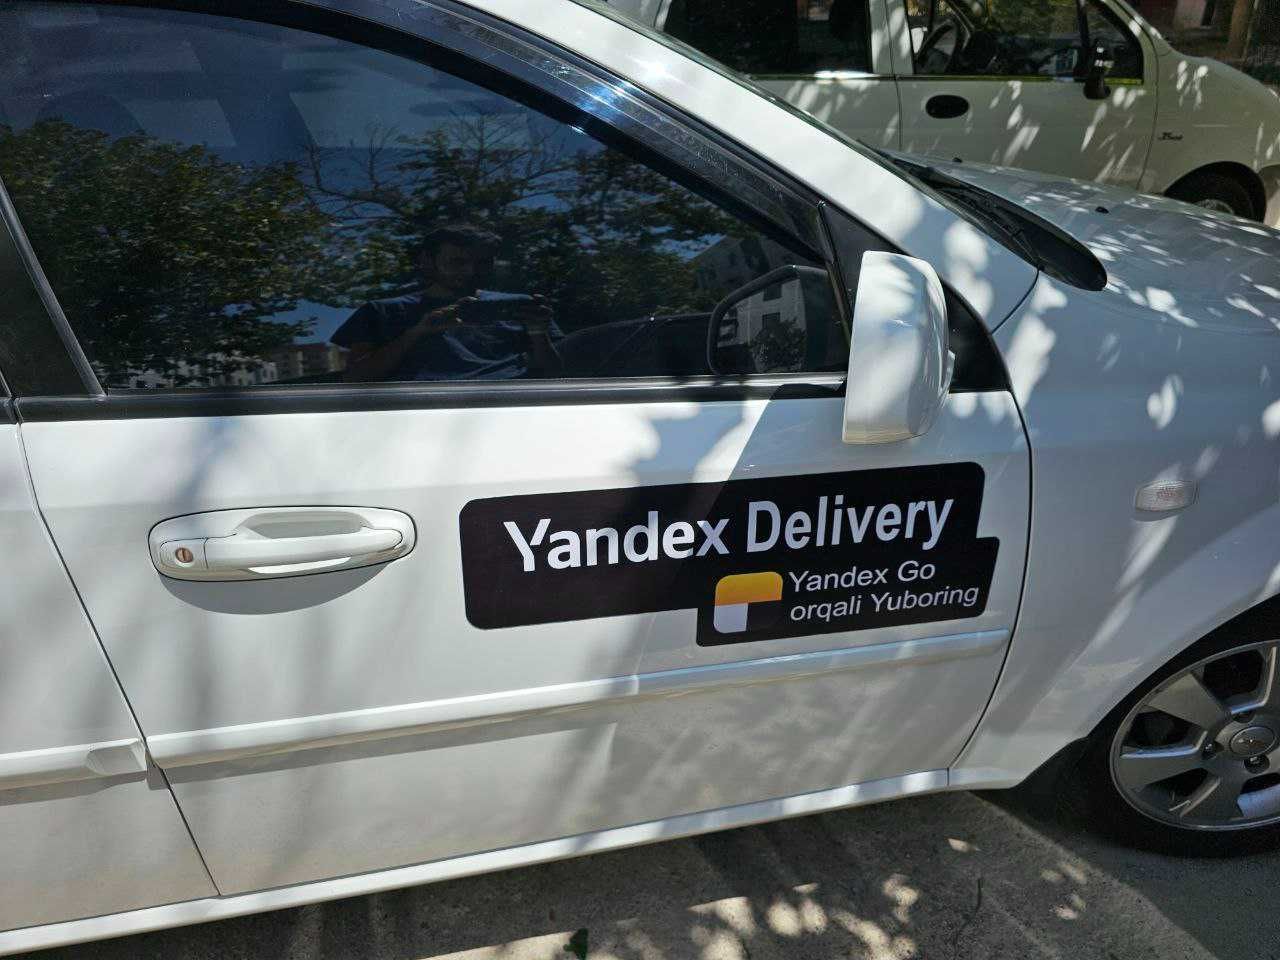 Yandex Delivery наклейки